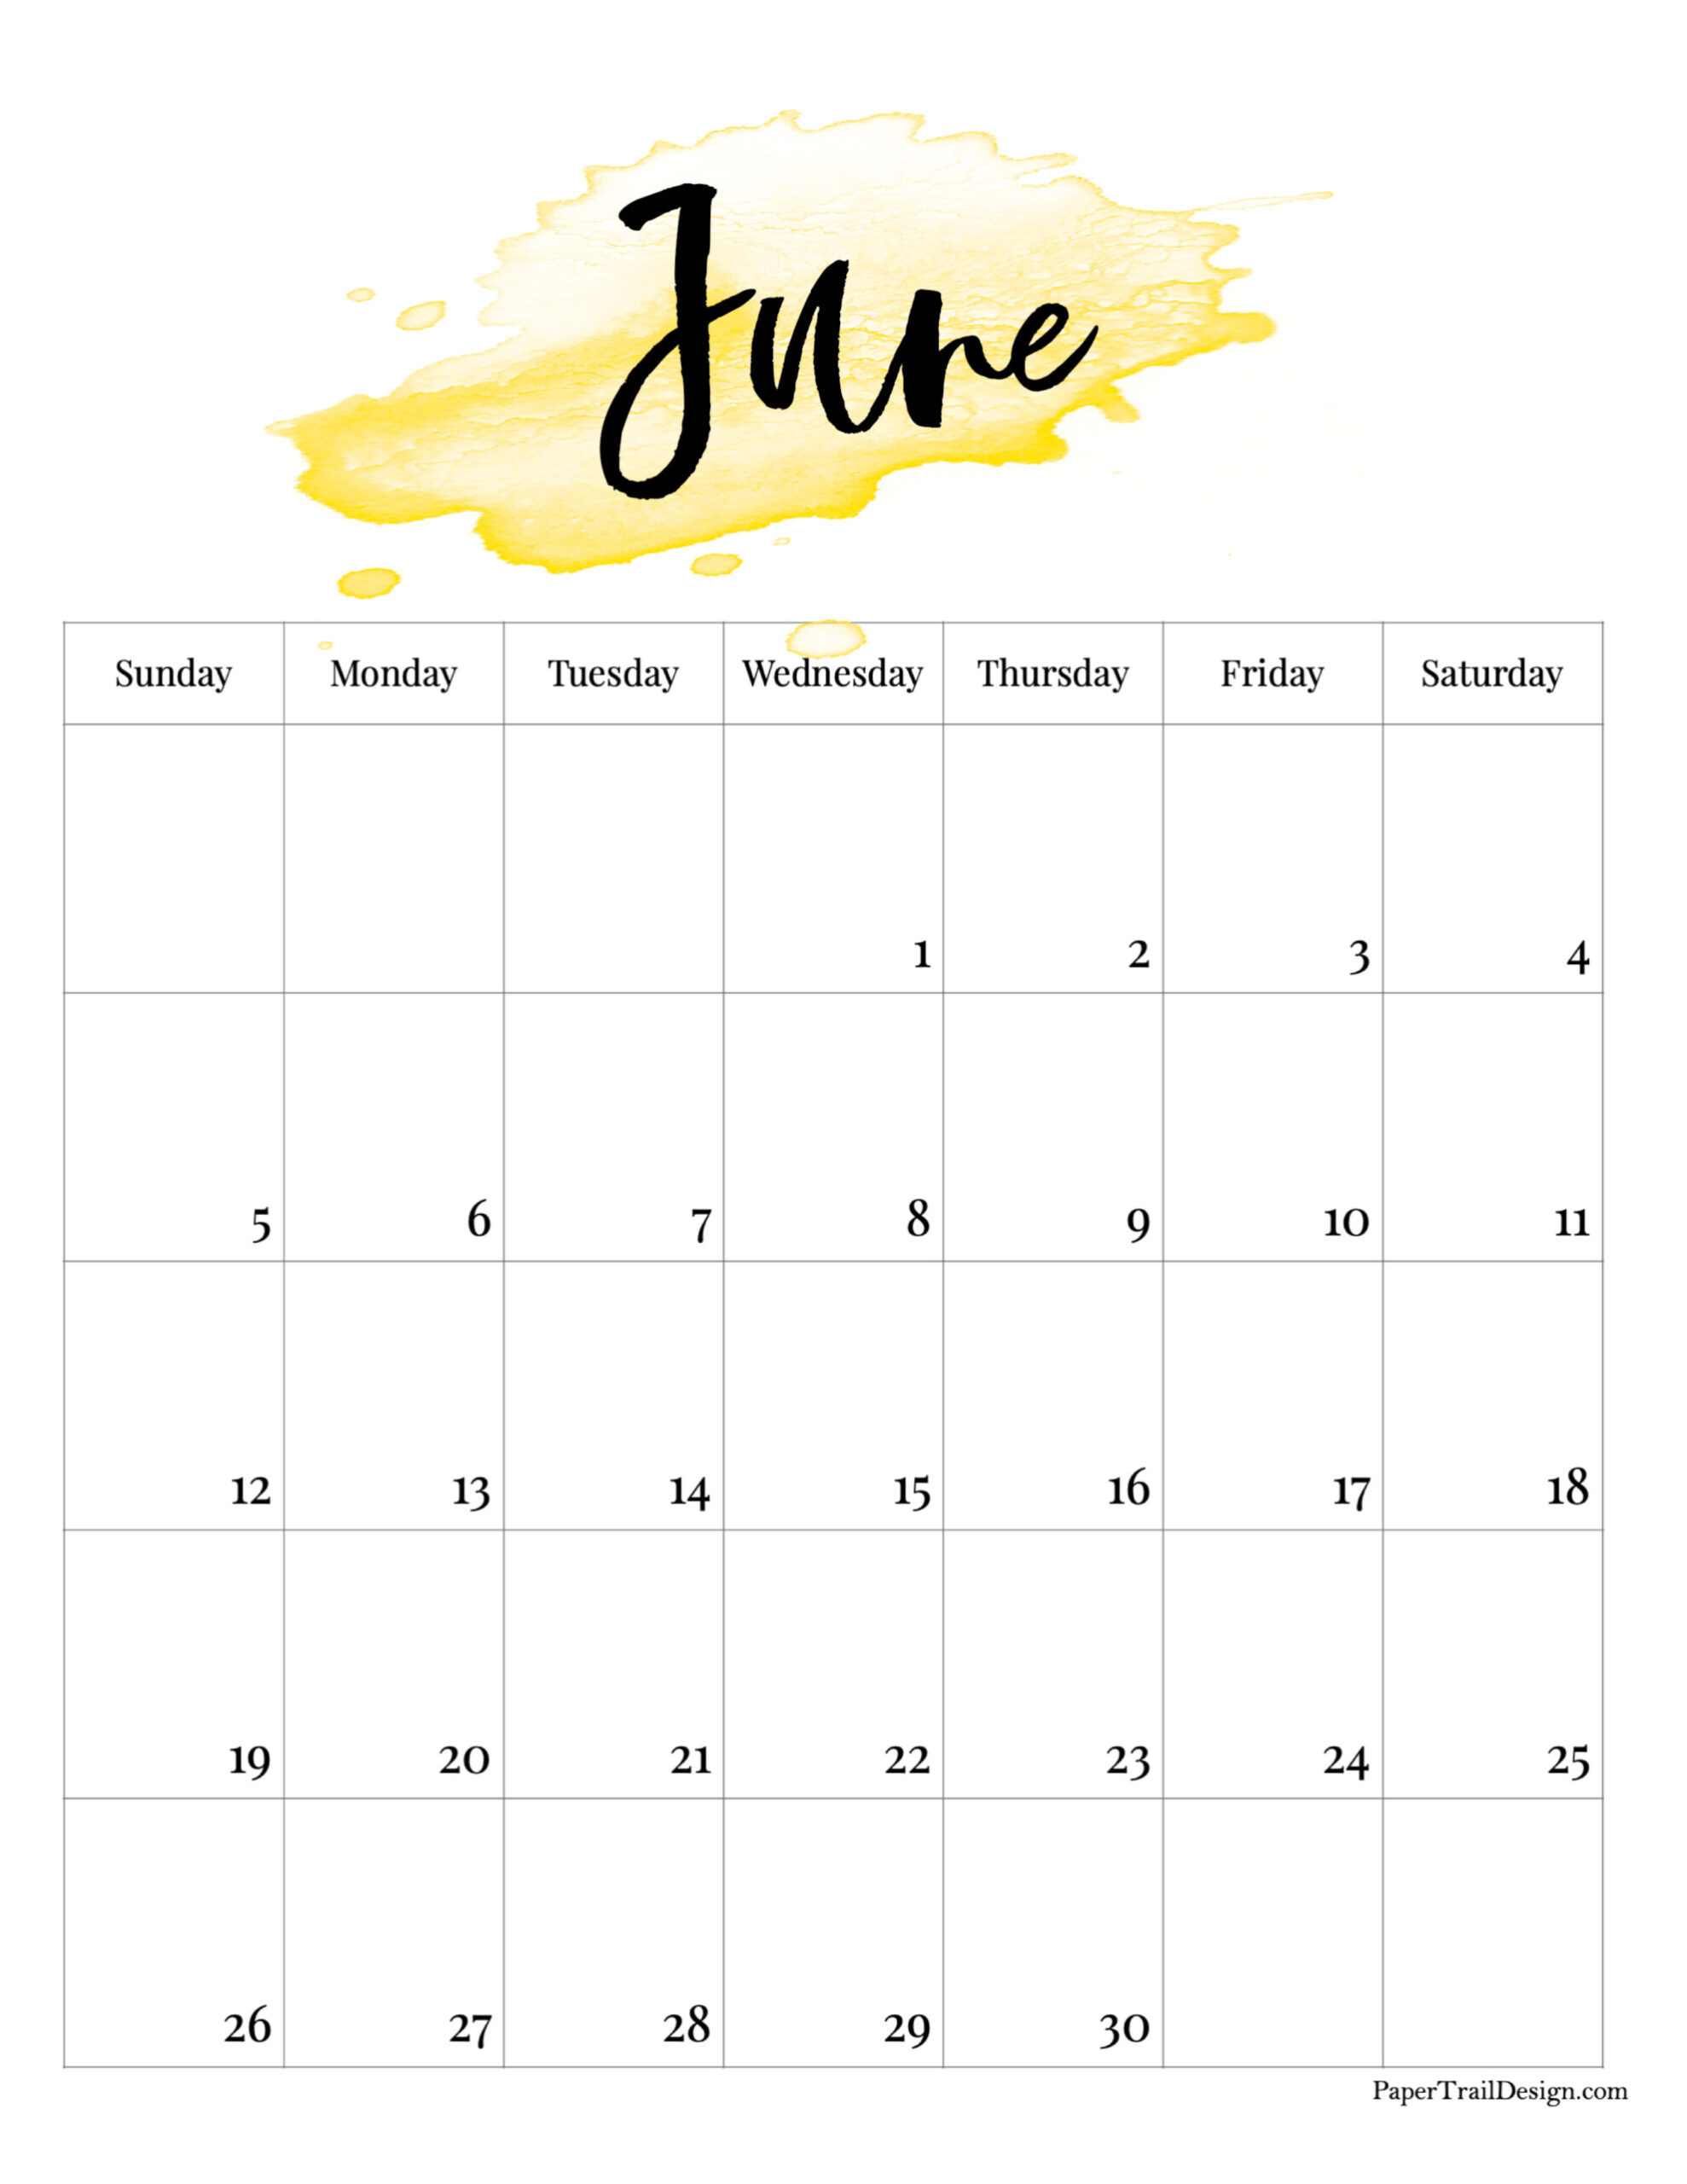 Catch Printable Calendar For June 2022